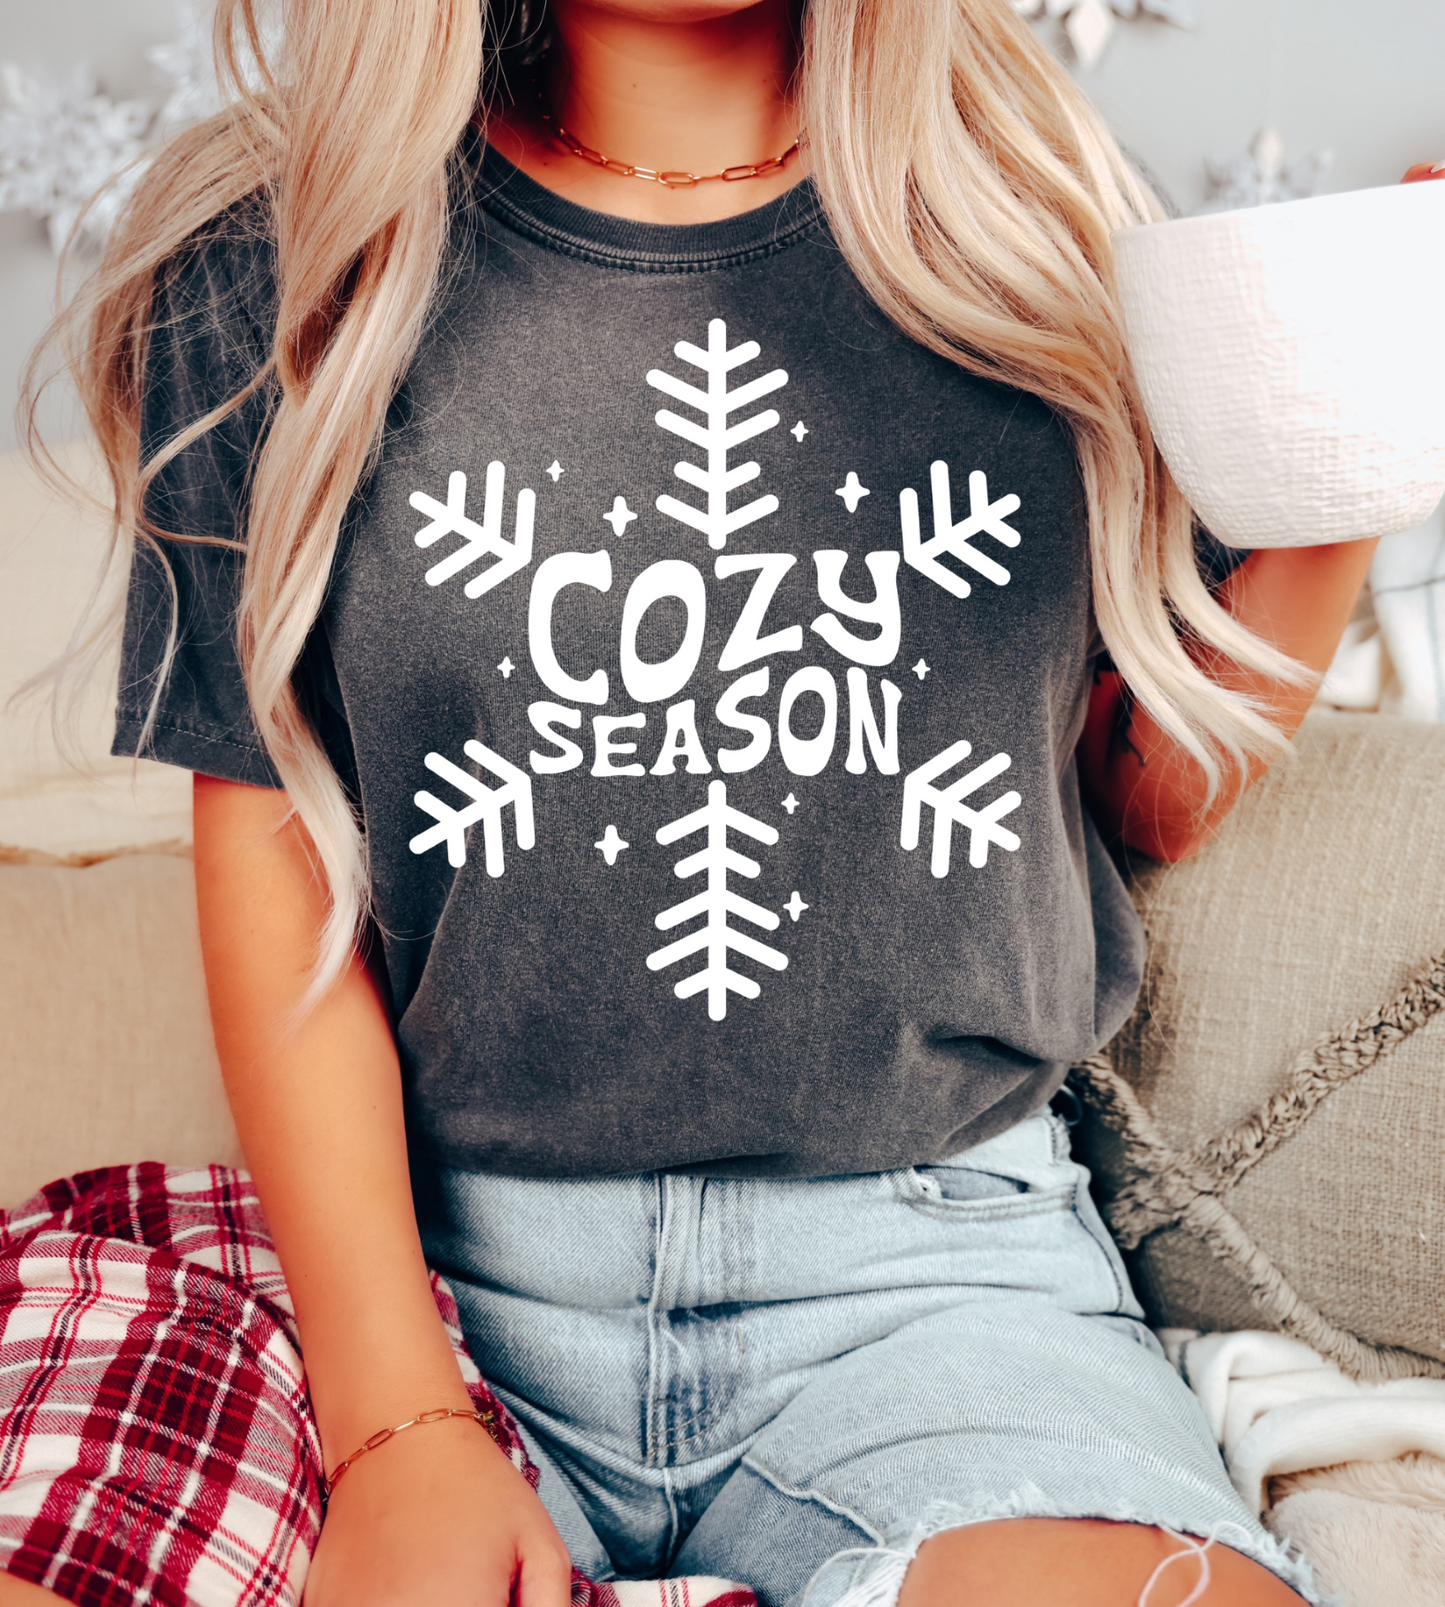 Pepper Cozy Season Snowflake Tee